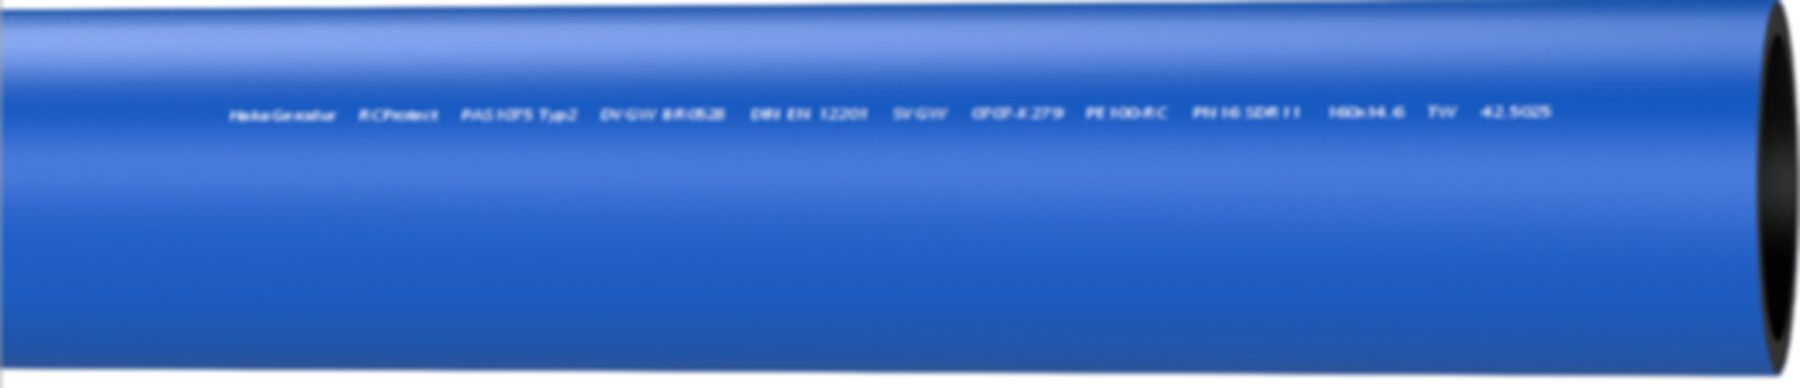 Druckrohr Wasser PE 100RC, SDR 17, PN 10 d 280 x 16.6mm - RCprotect in Stangen